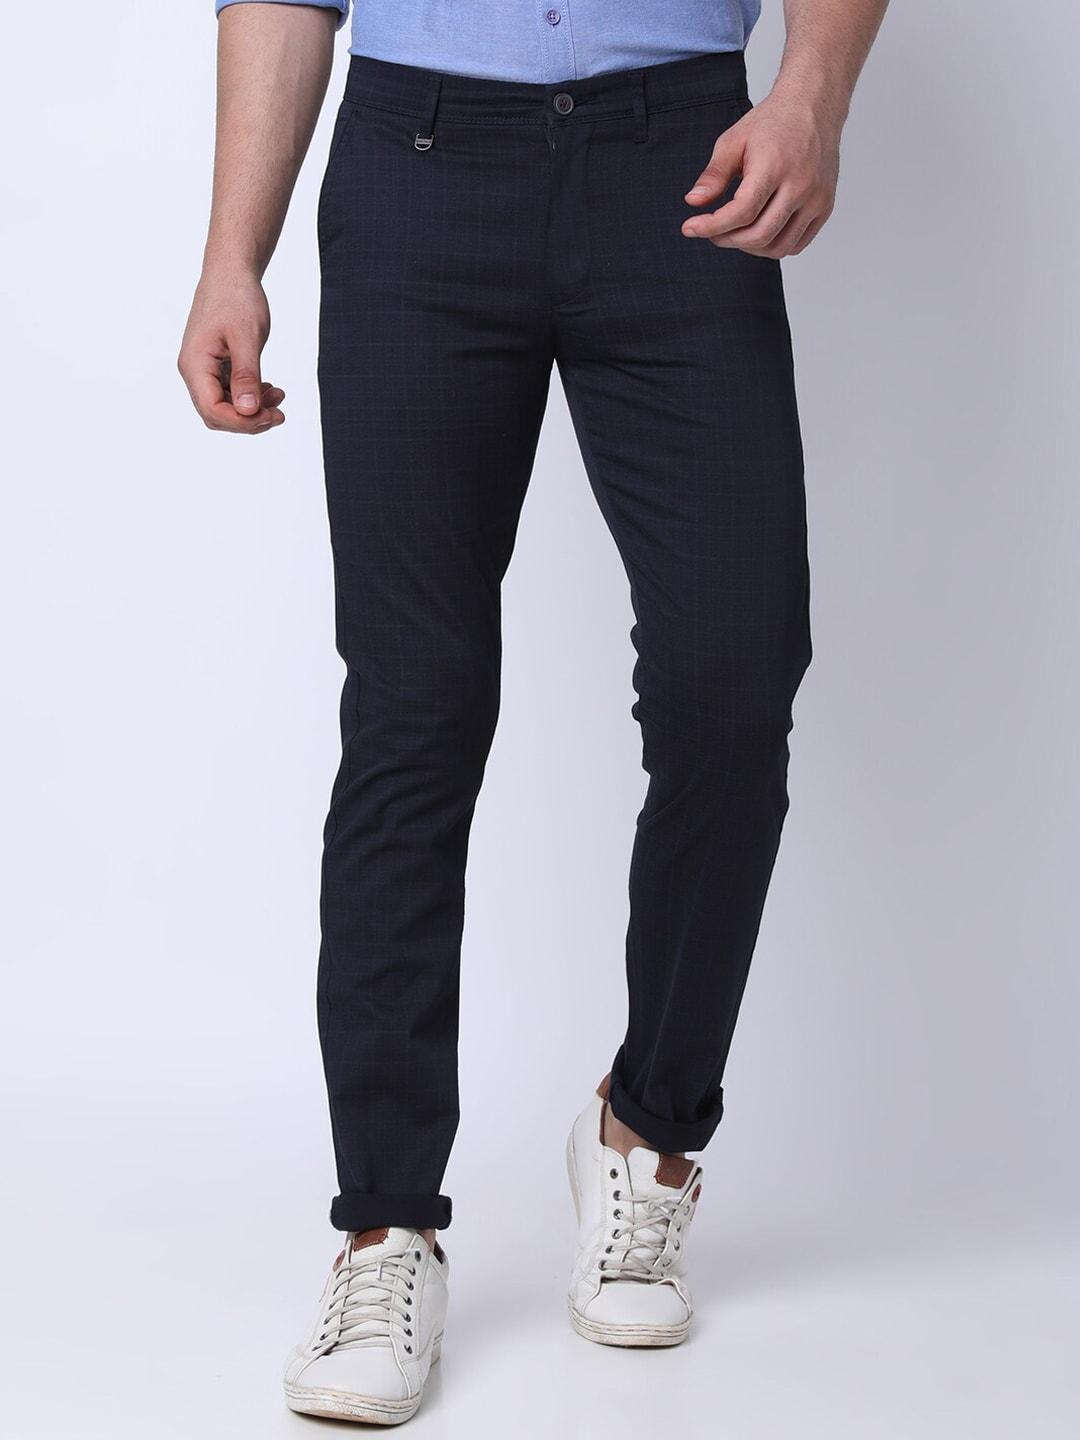 oxemberg-men-slim-fit-cotton-trousers